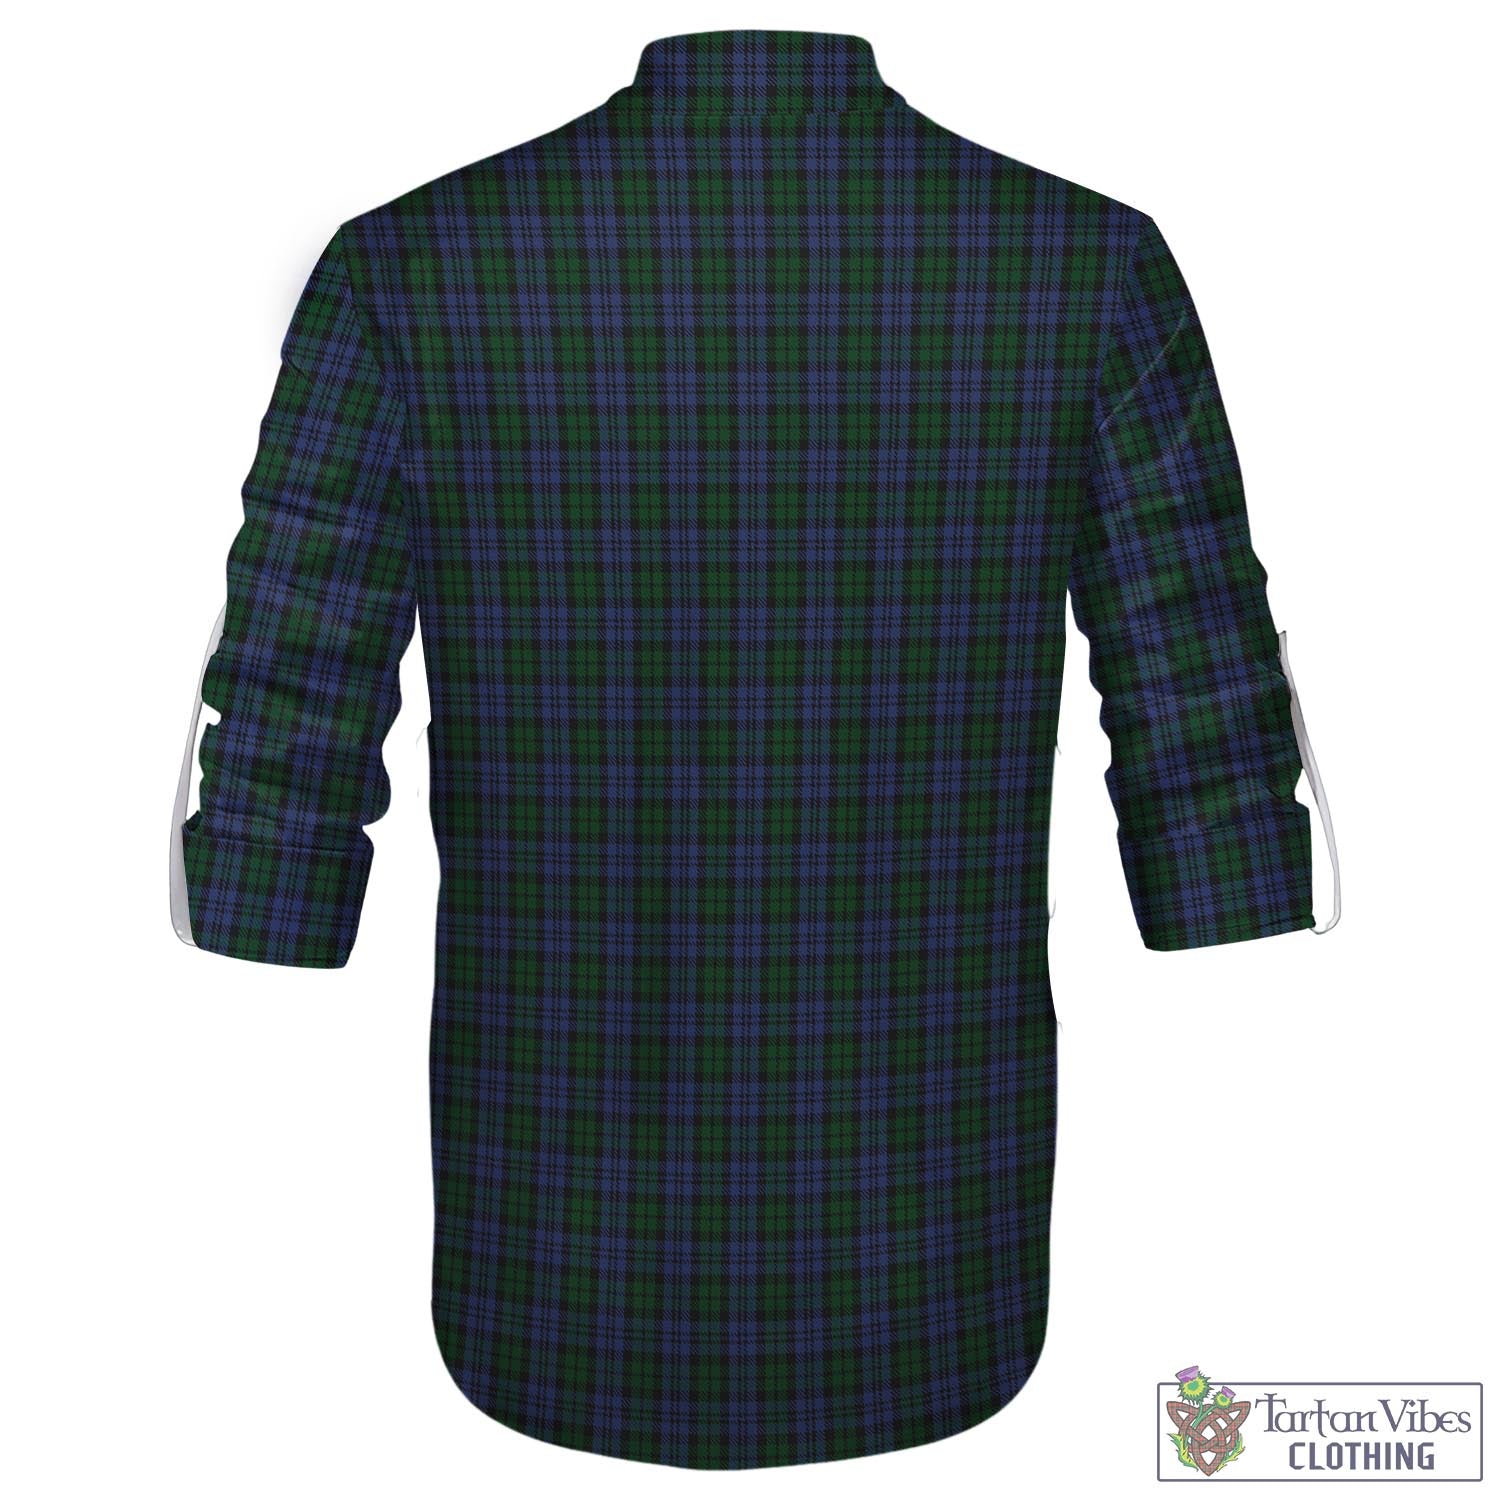 Tartan Vibes Clothing Sutherland Tartan Men's Scottish Traditional Jacobite Ghillie Kilt Shirt with Family Crest